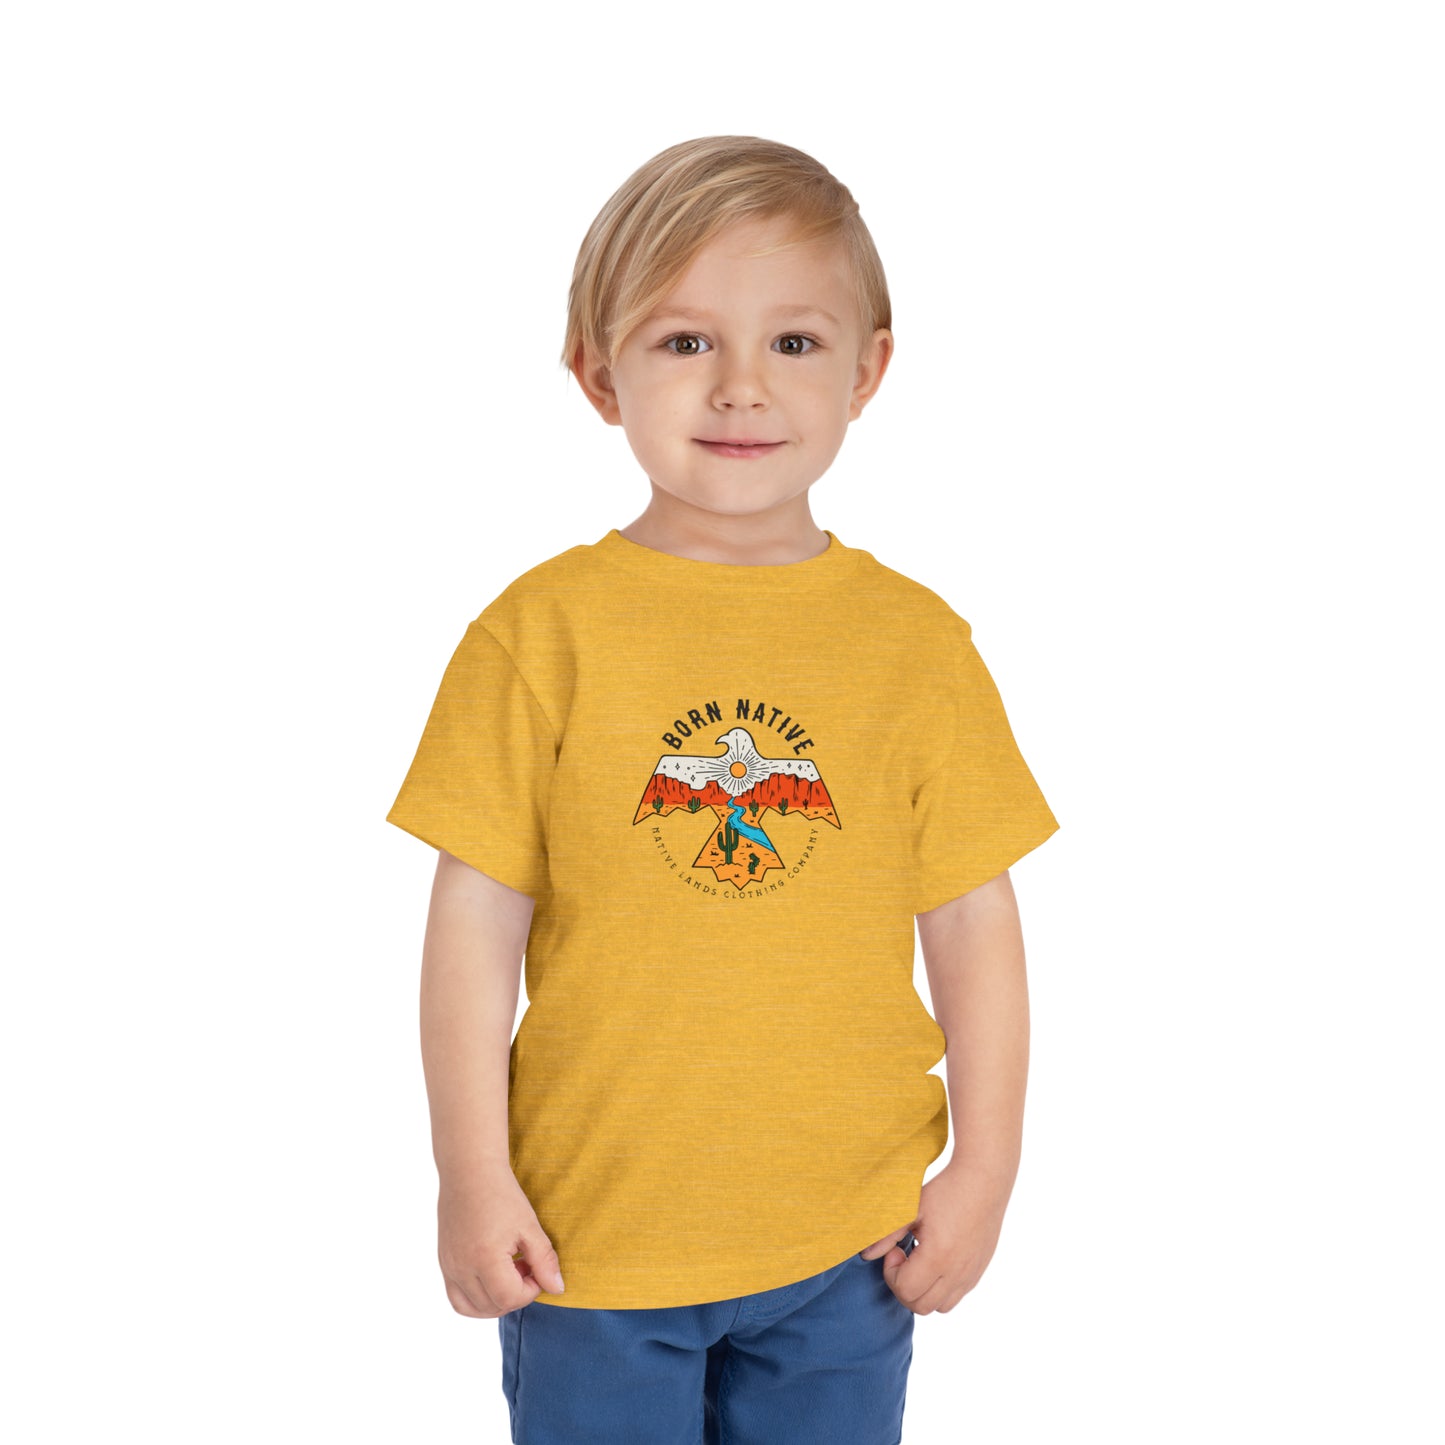 Koszula dla malucha Born Native, bawełniana, indiańska